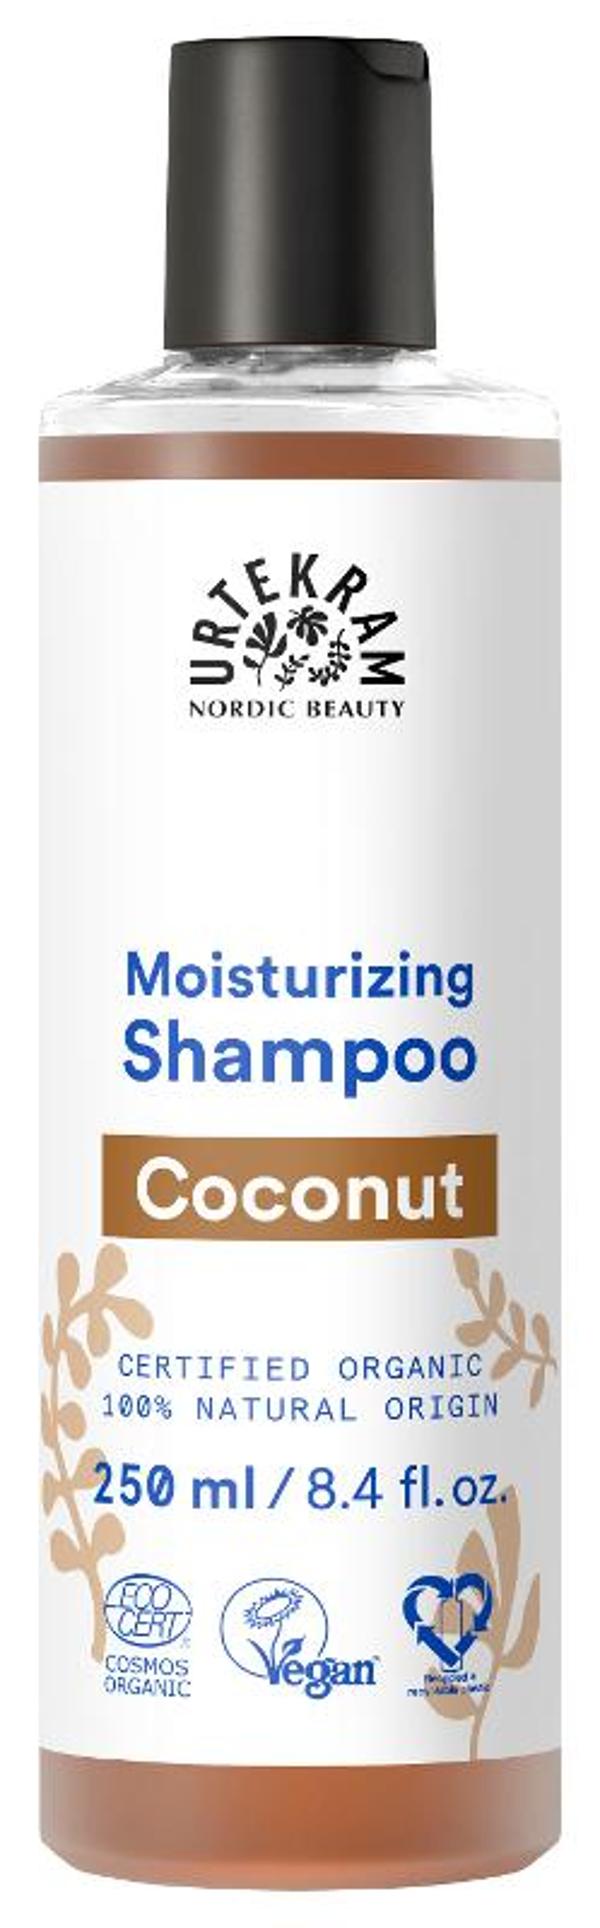 Produktfoto zu Kokos Shampoo